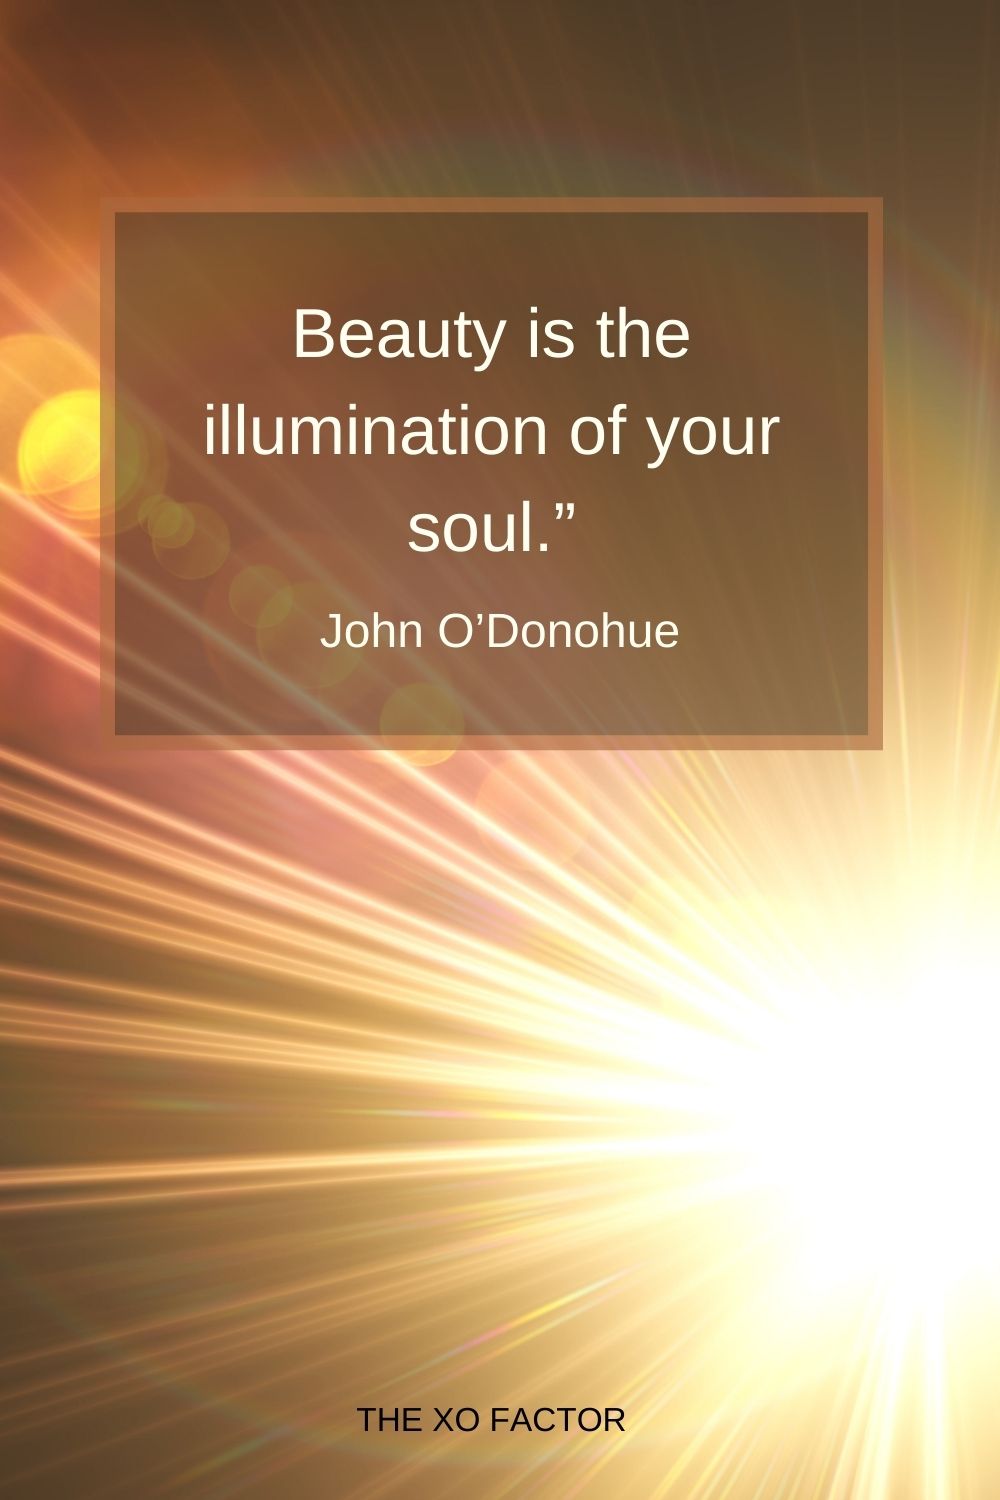 Beauty is the illumination of your soul.” John O’Donohue